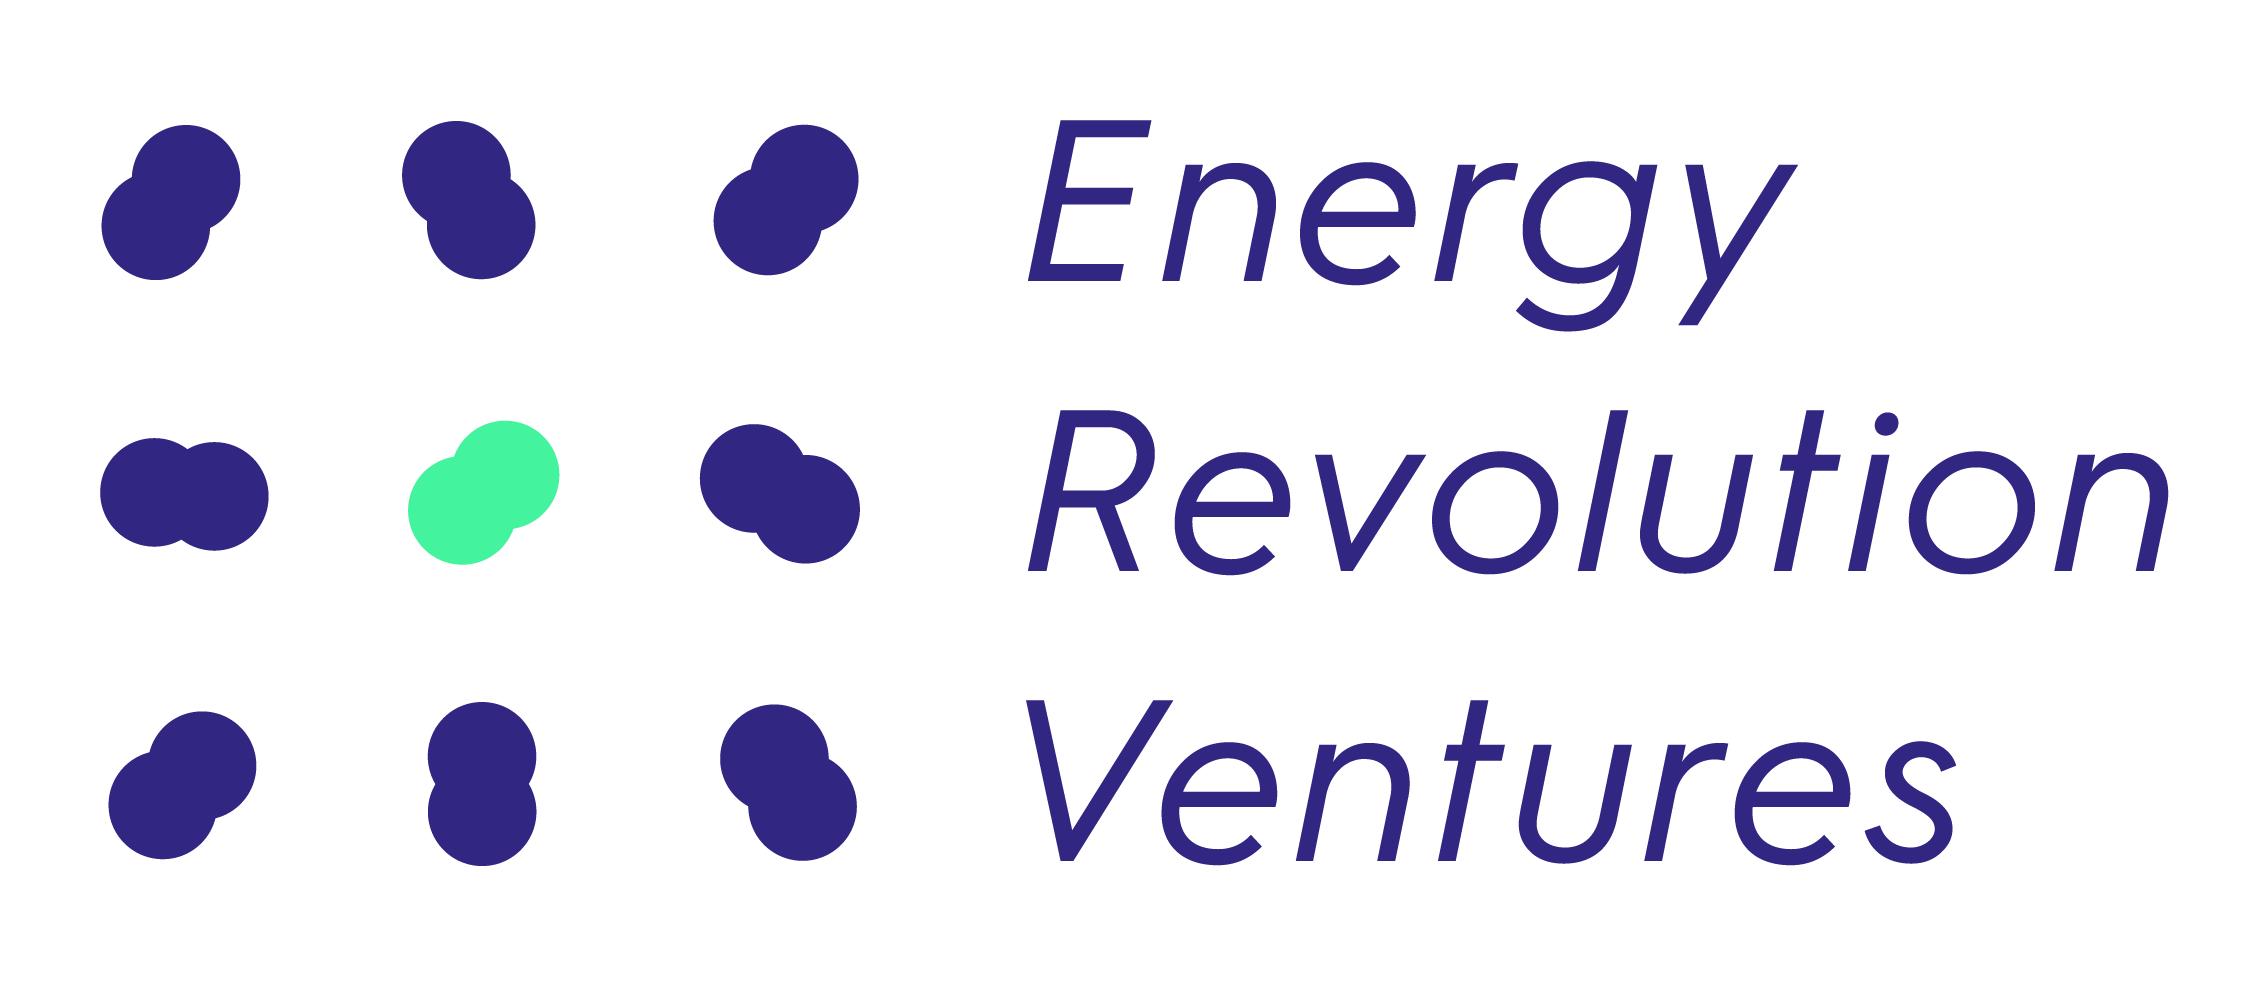 Energy Revolution Ventures logo